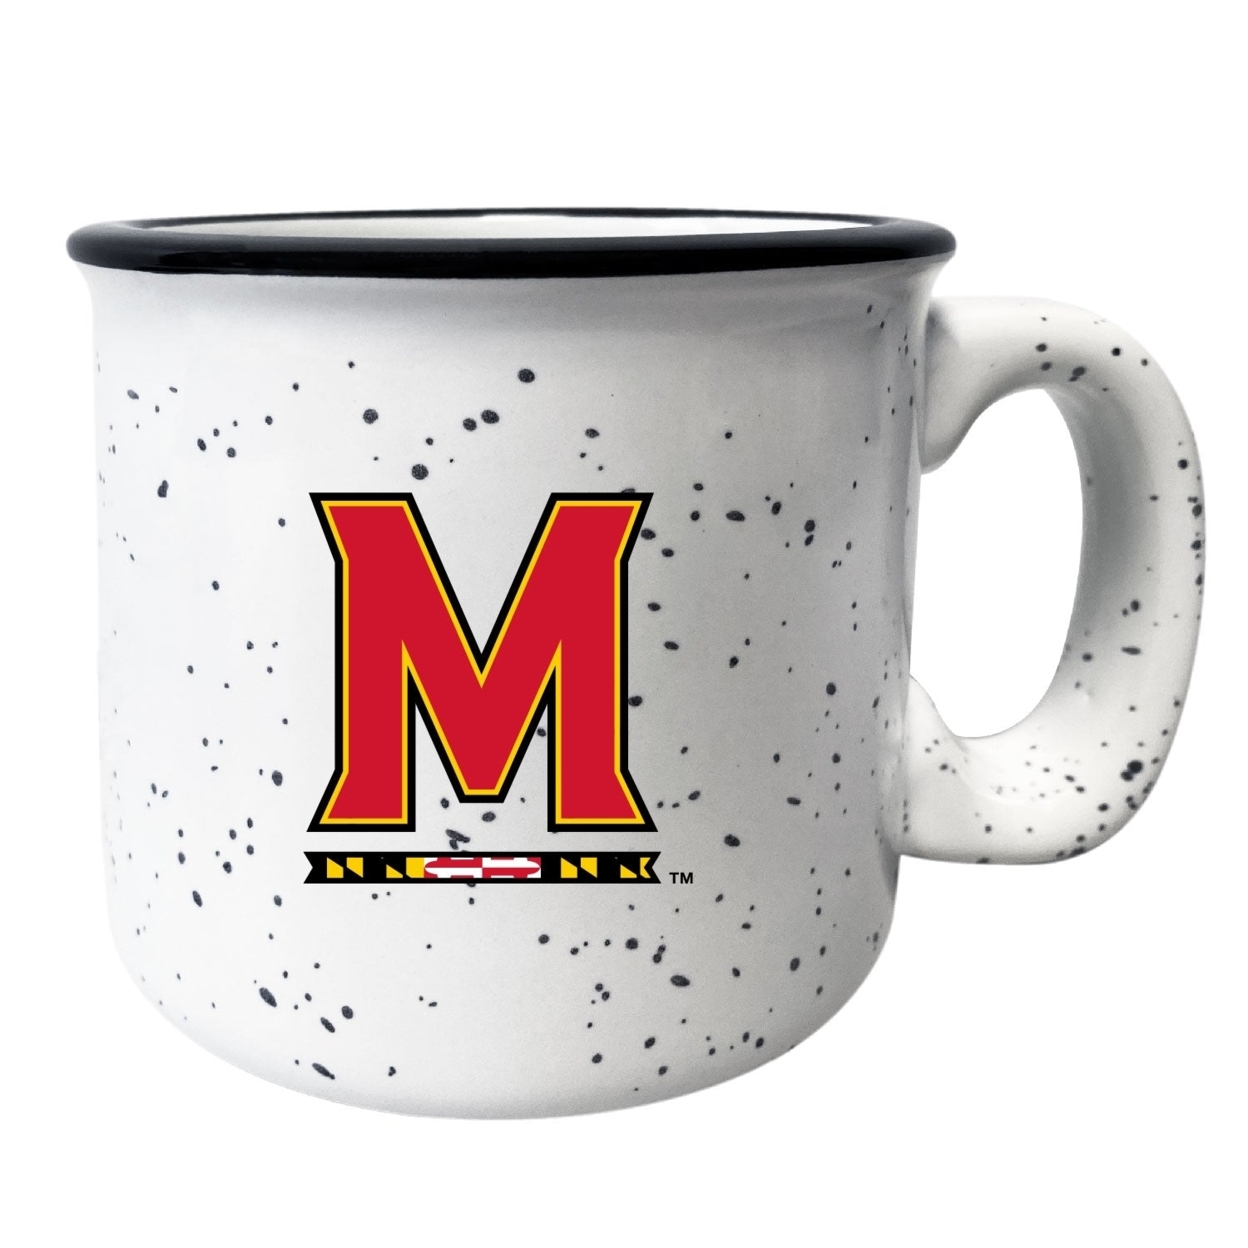 Maryland Terrapins Speckled Ceramic Camper Coffee Mug - Choose Your Color - Gray